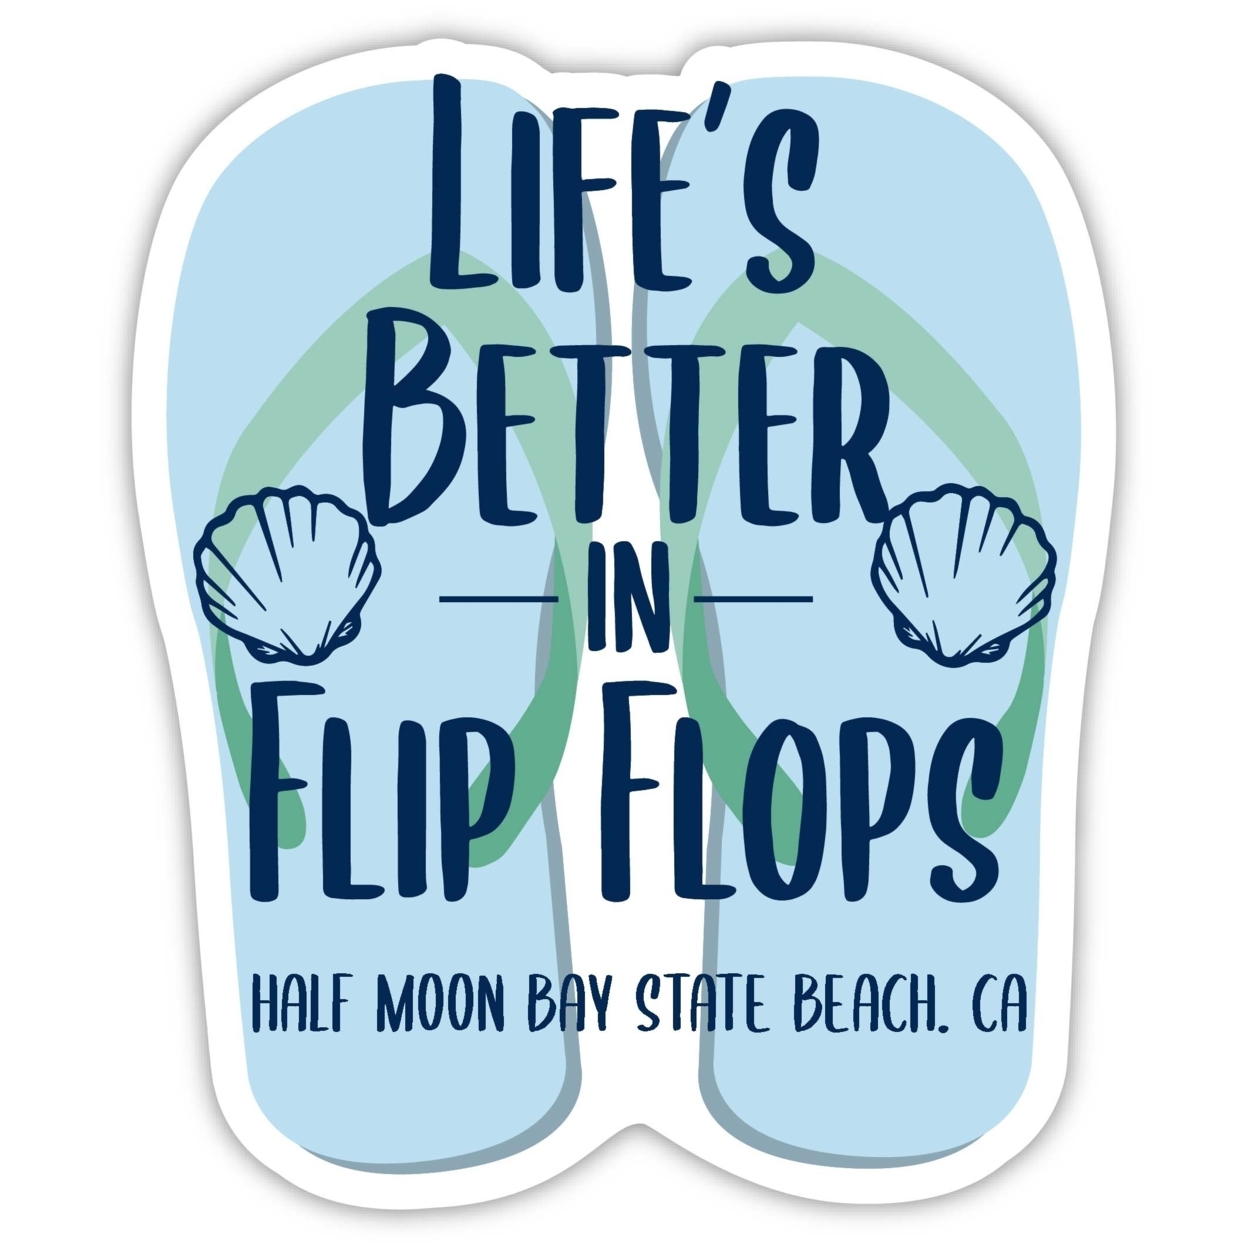 Half Moon Bay State Beach California Souvenir 4 Inch Vinyl Decal Sticker Flip Flop Design